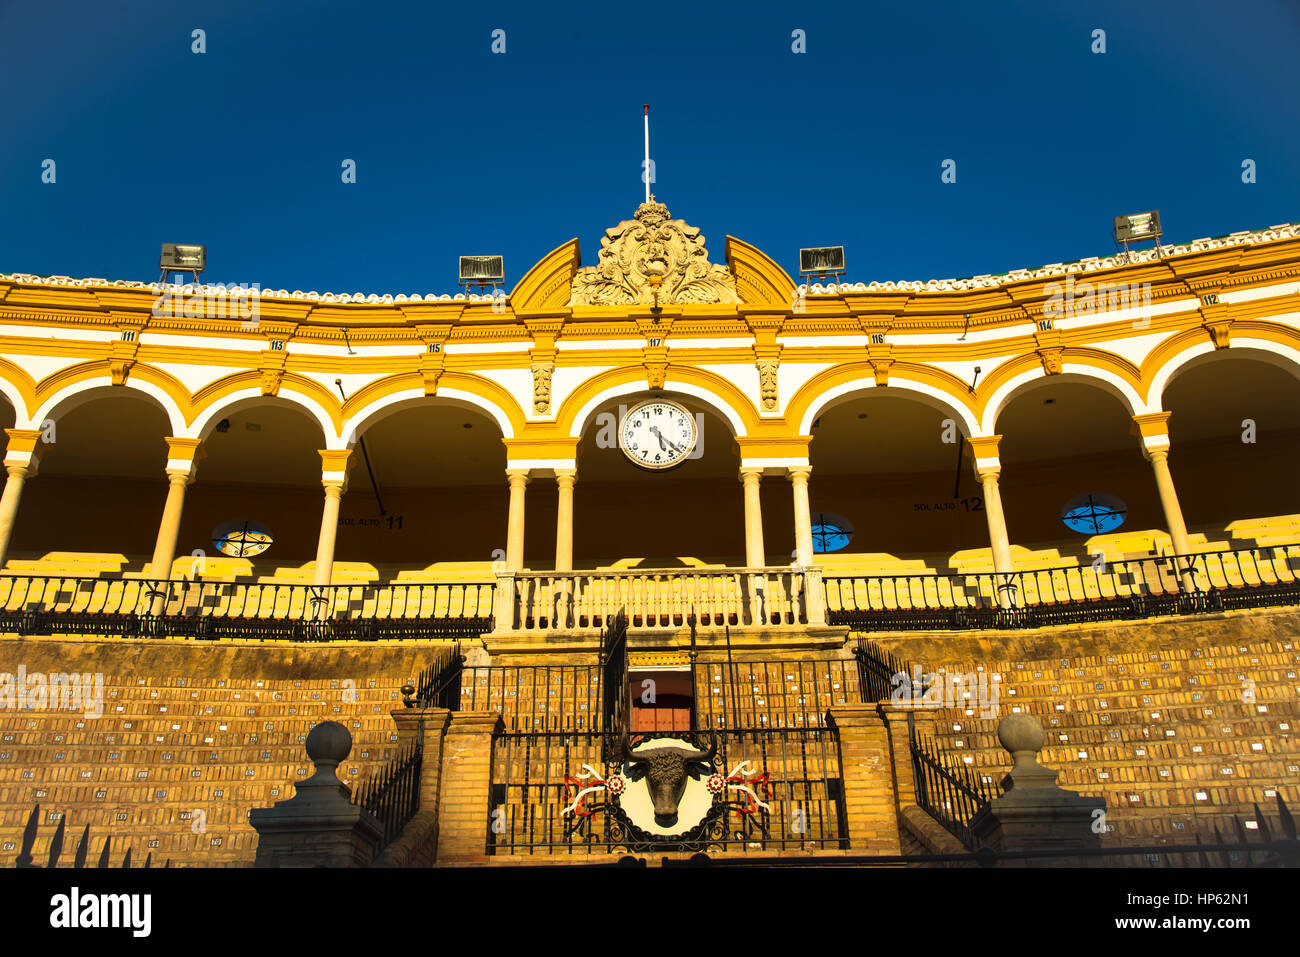 the famous bullfight square in sevilla, spain Stock Photo